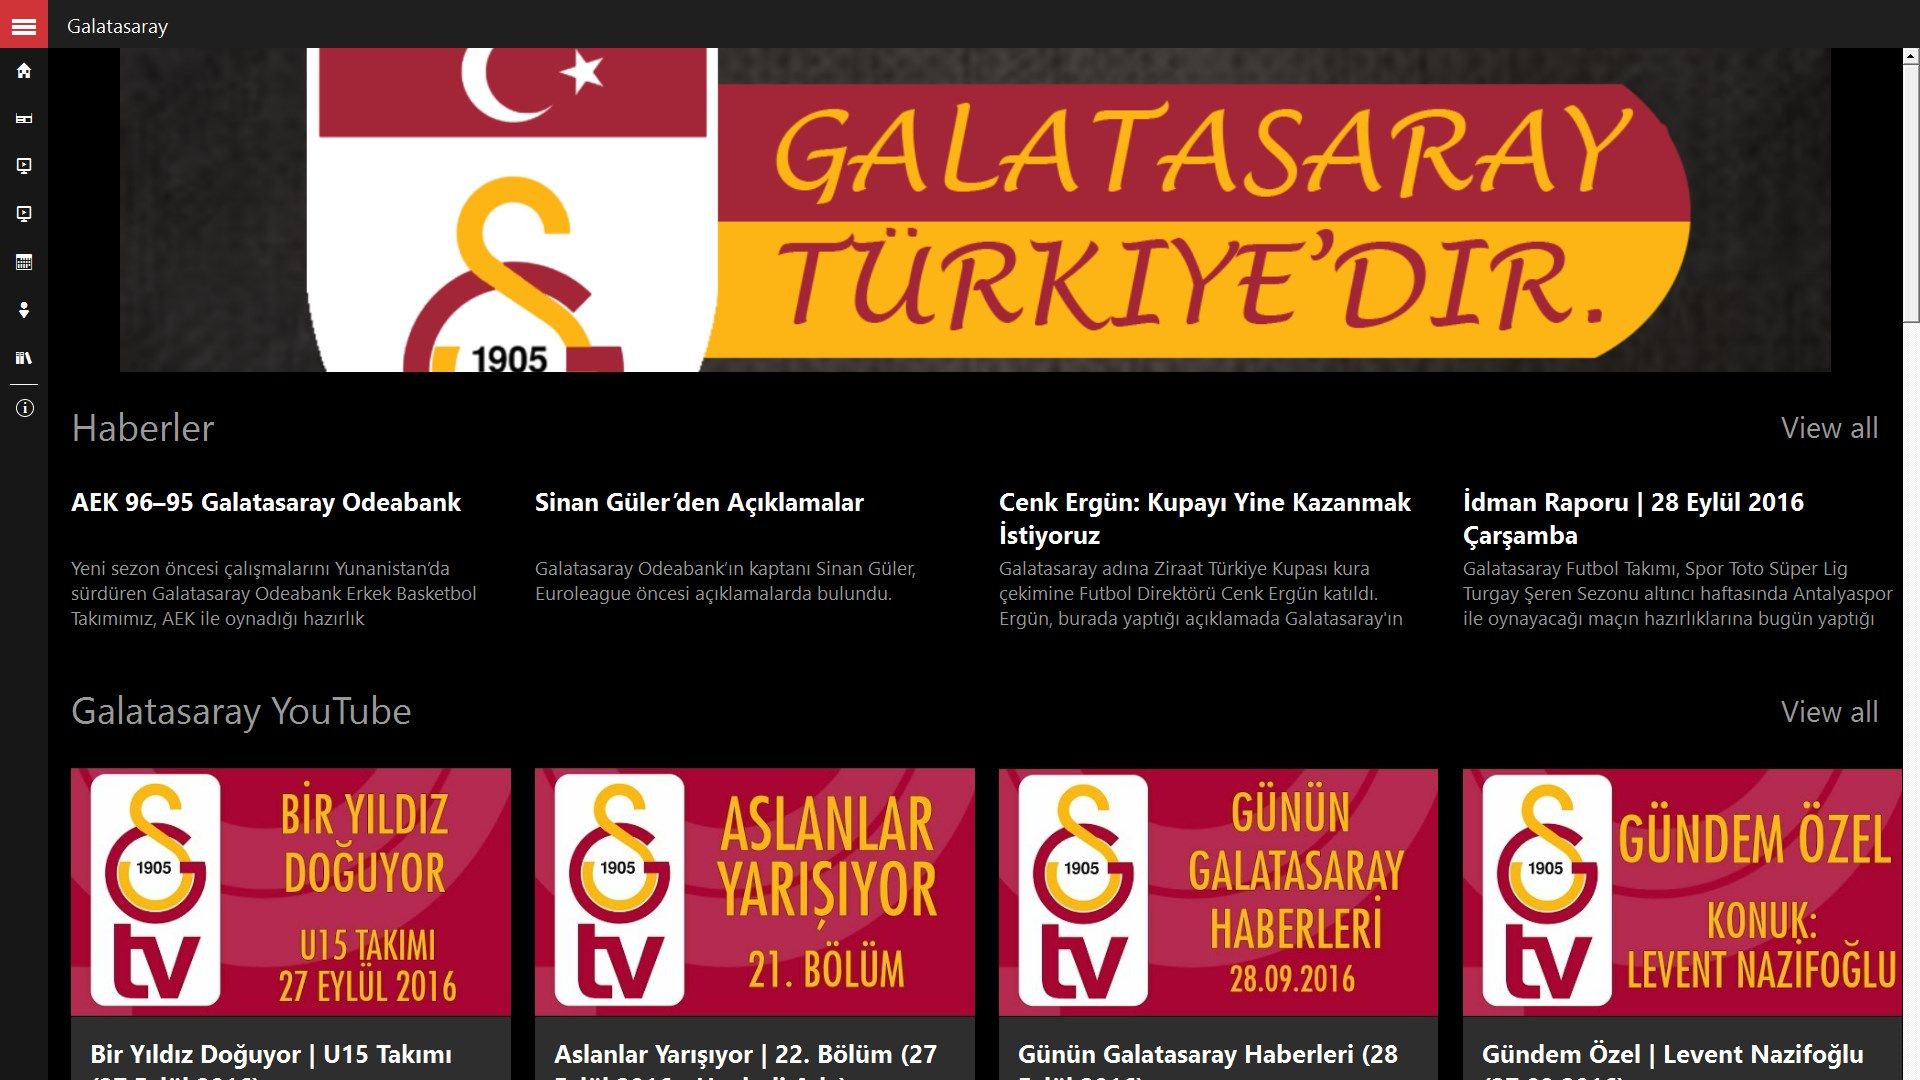 Galatasaray1905